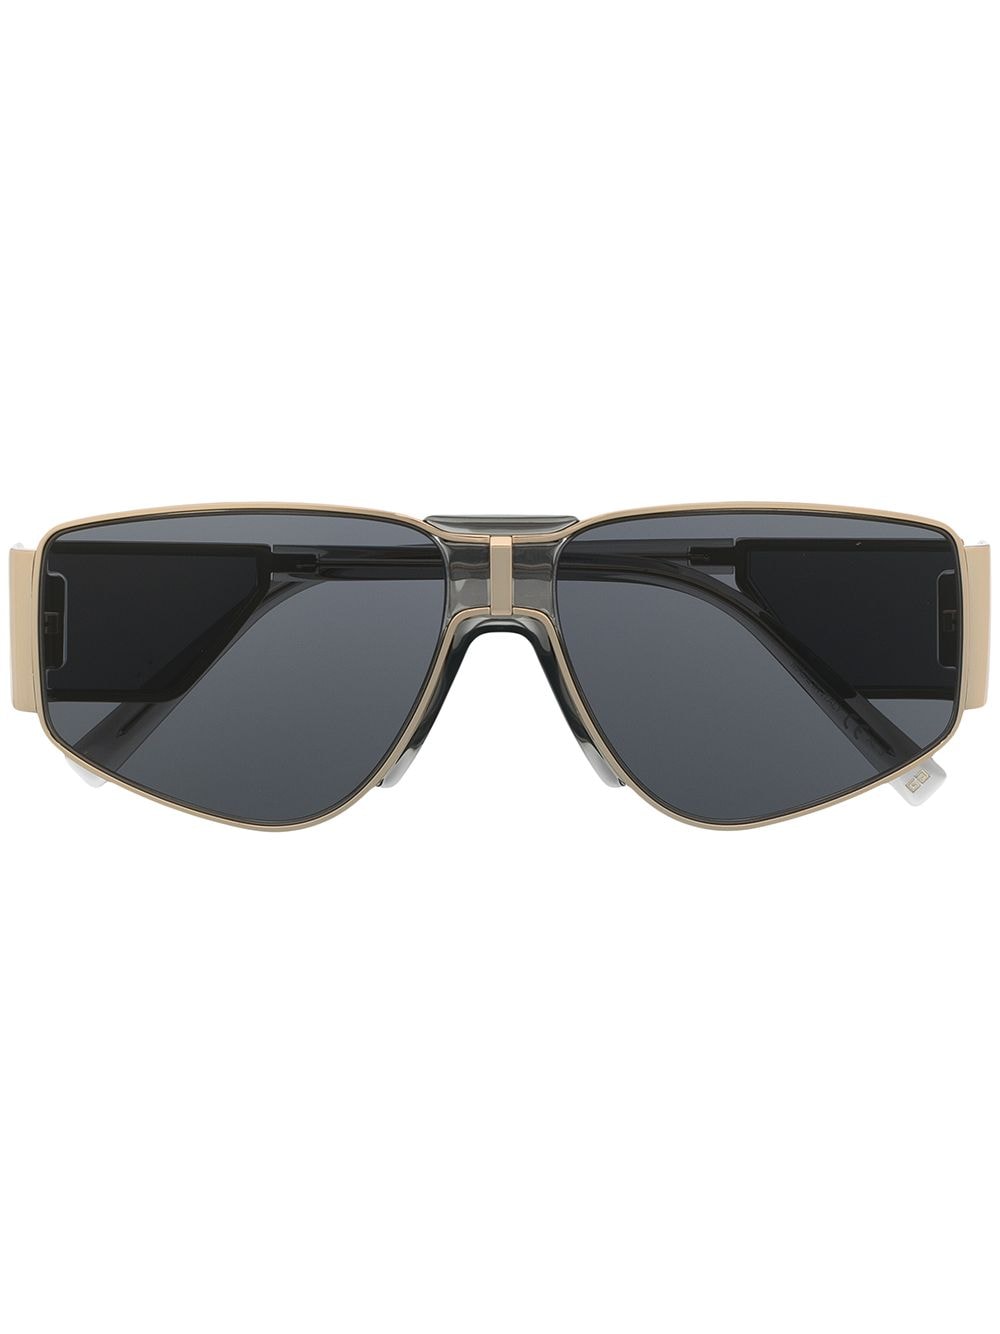 Givenchy Eyewear GV Vision pilot-frame sunglasses - Grey